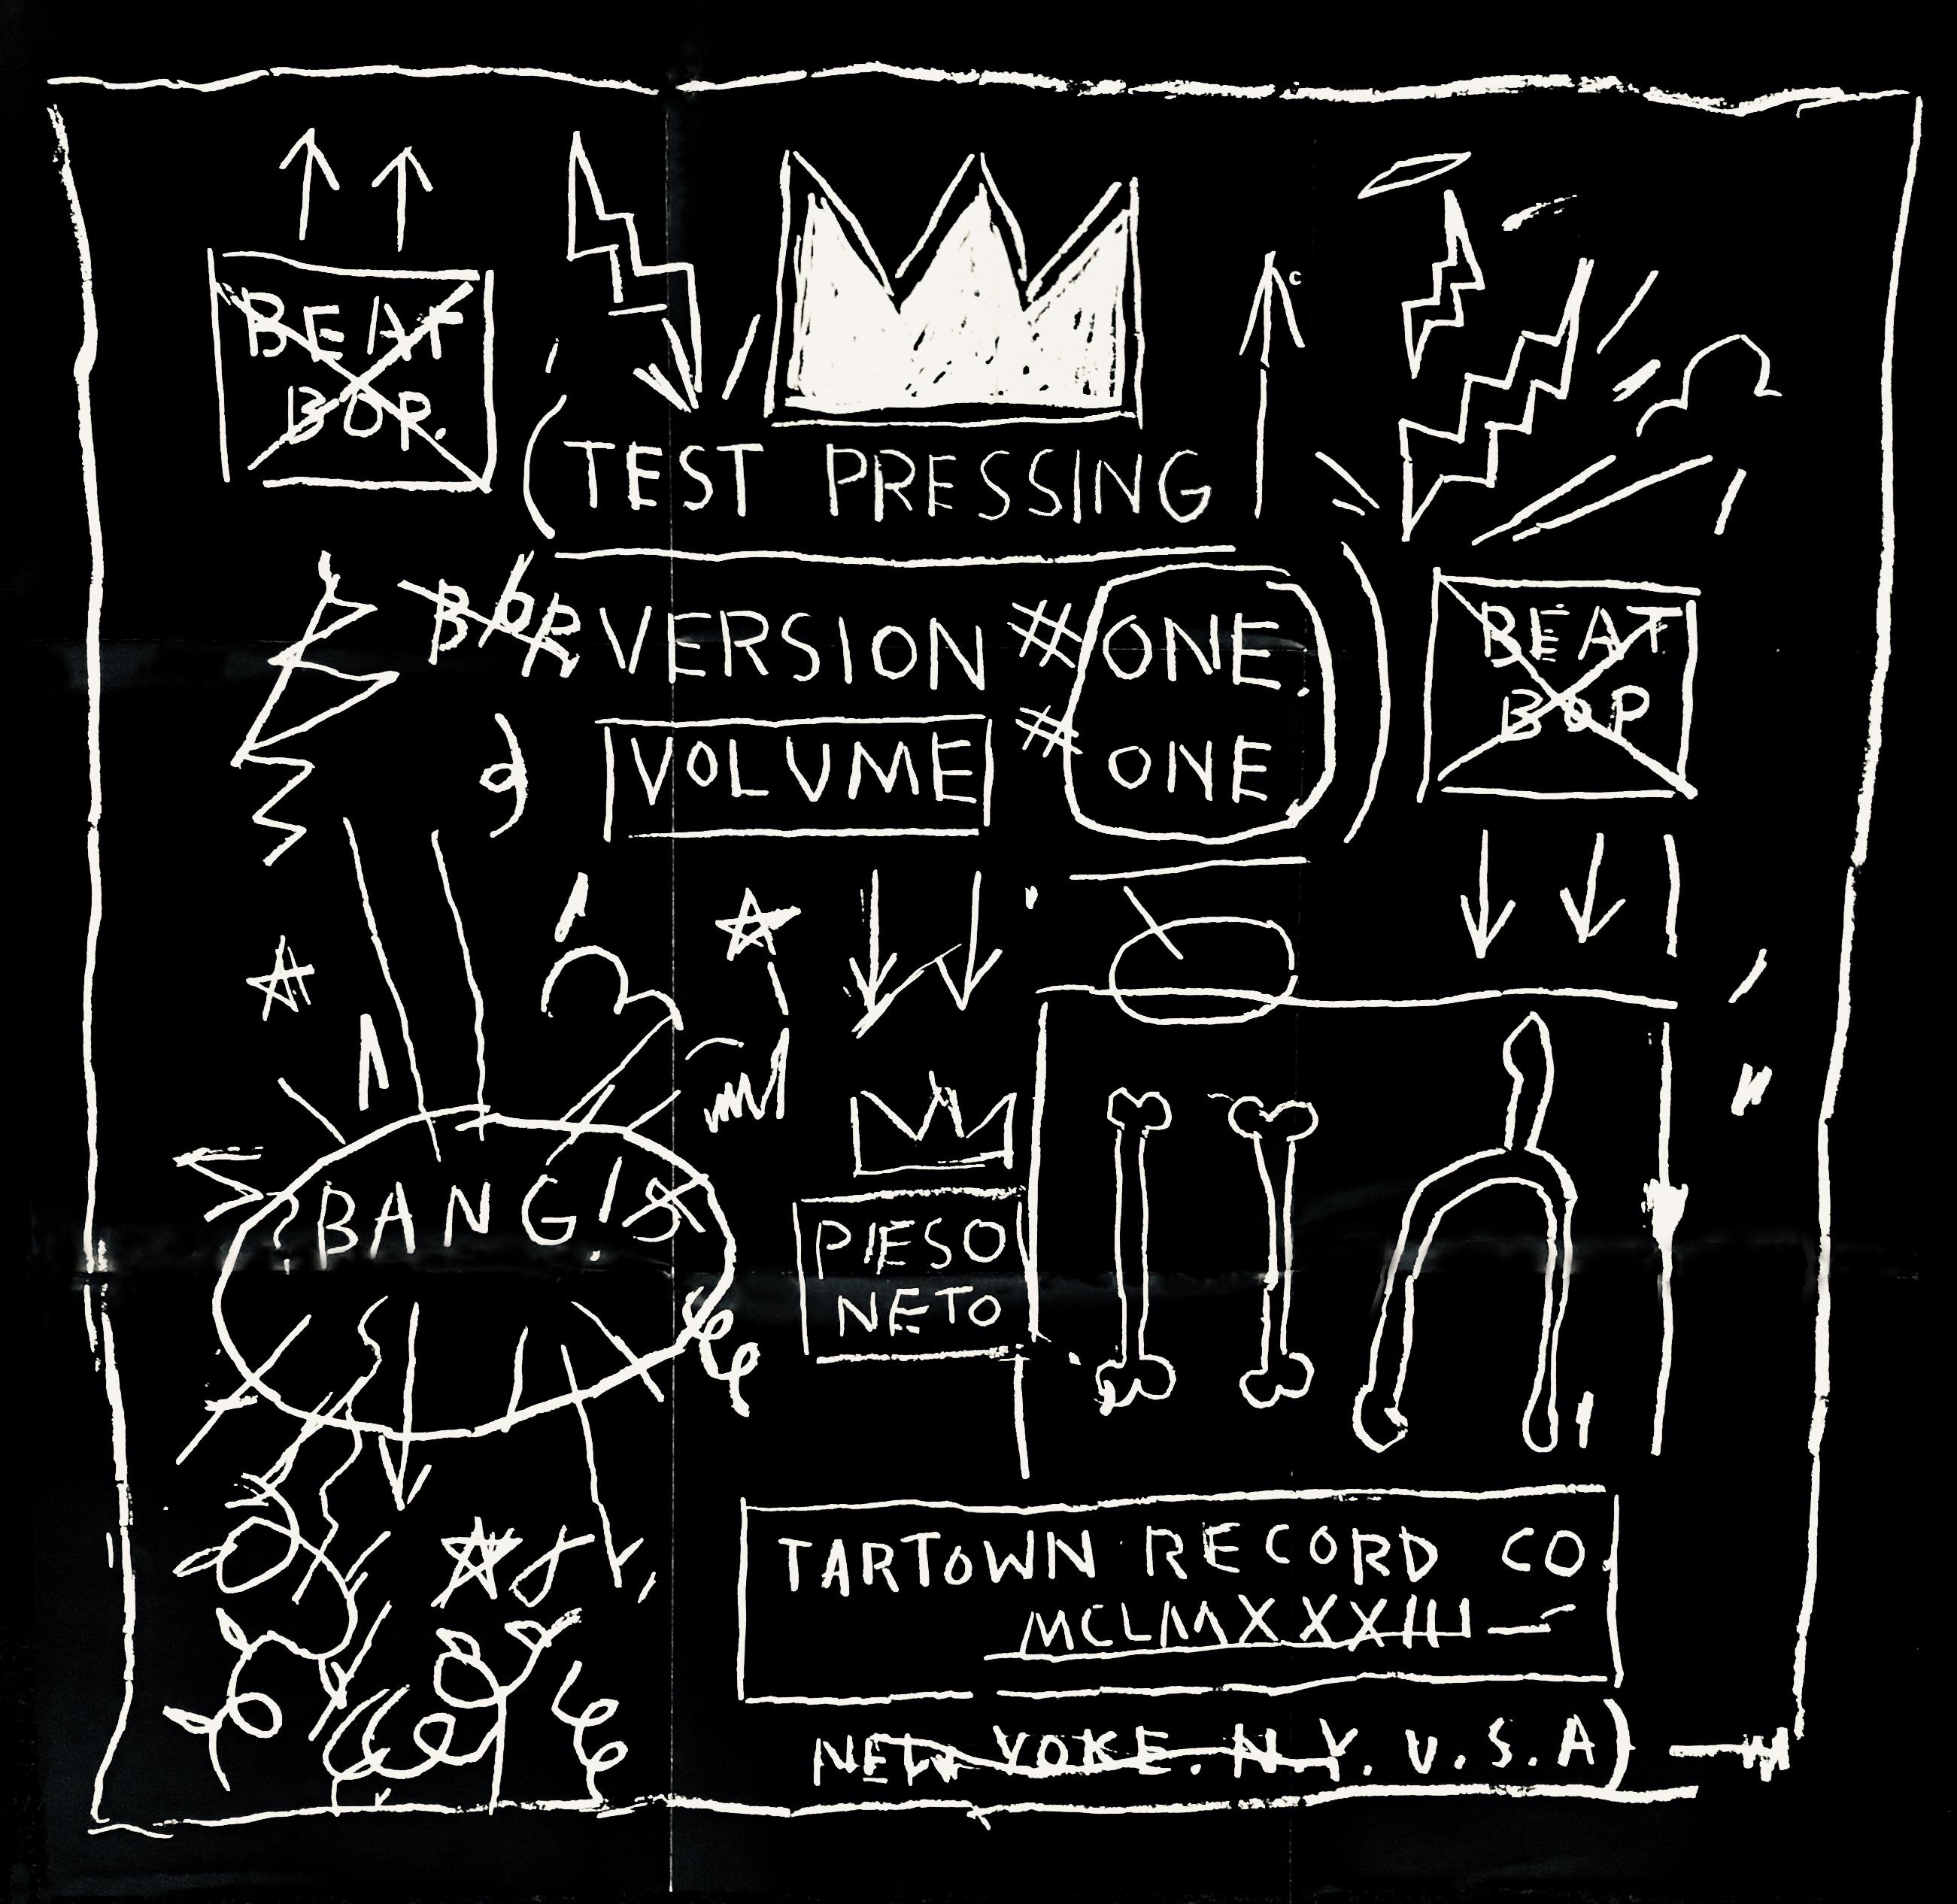 Basquiat Beat Bop record art and poster (Basquiat album art)  - Pop Art Print by (after) Jean-Michel Basquiat